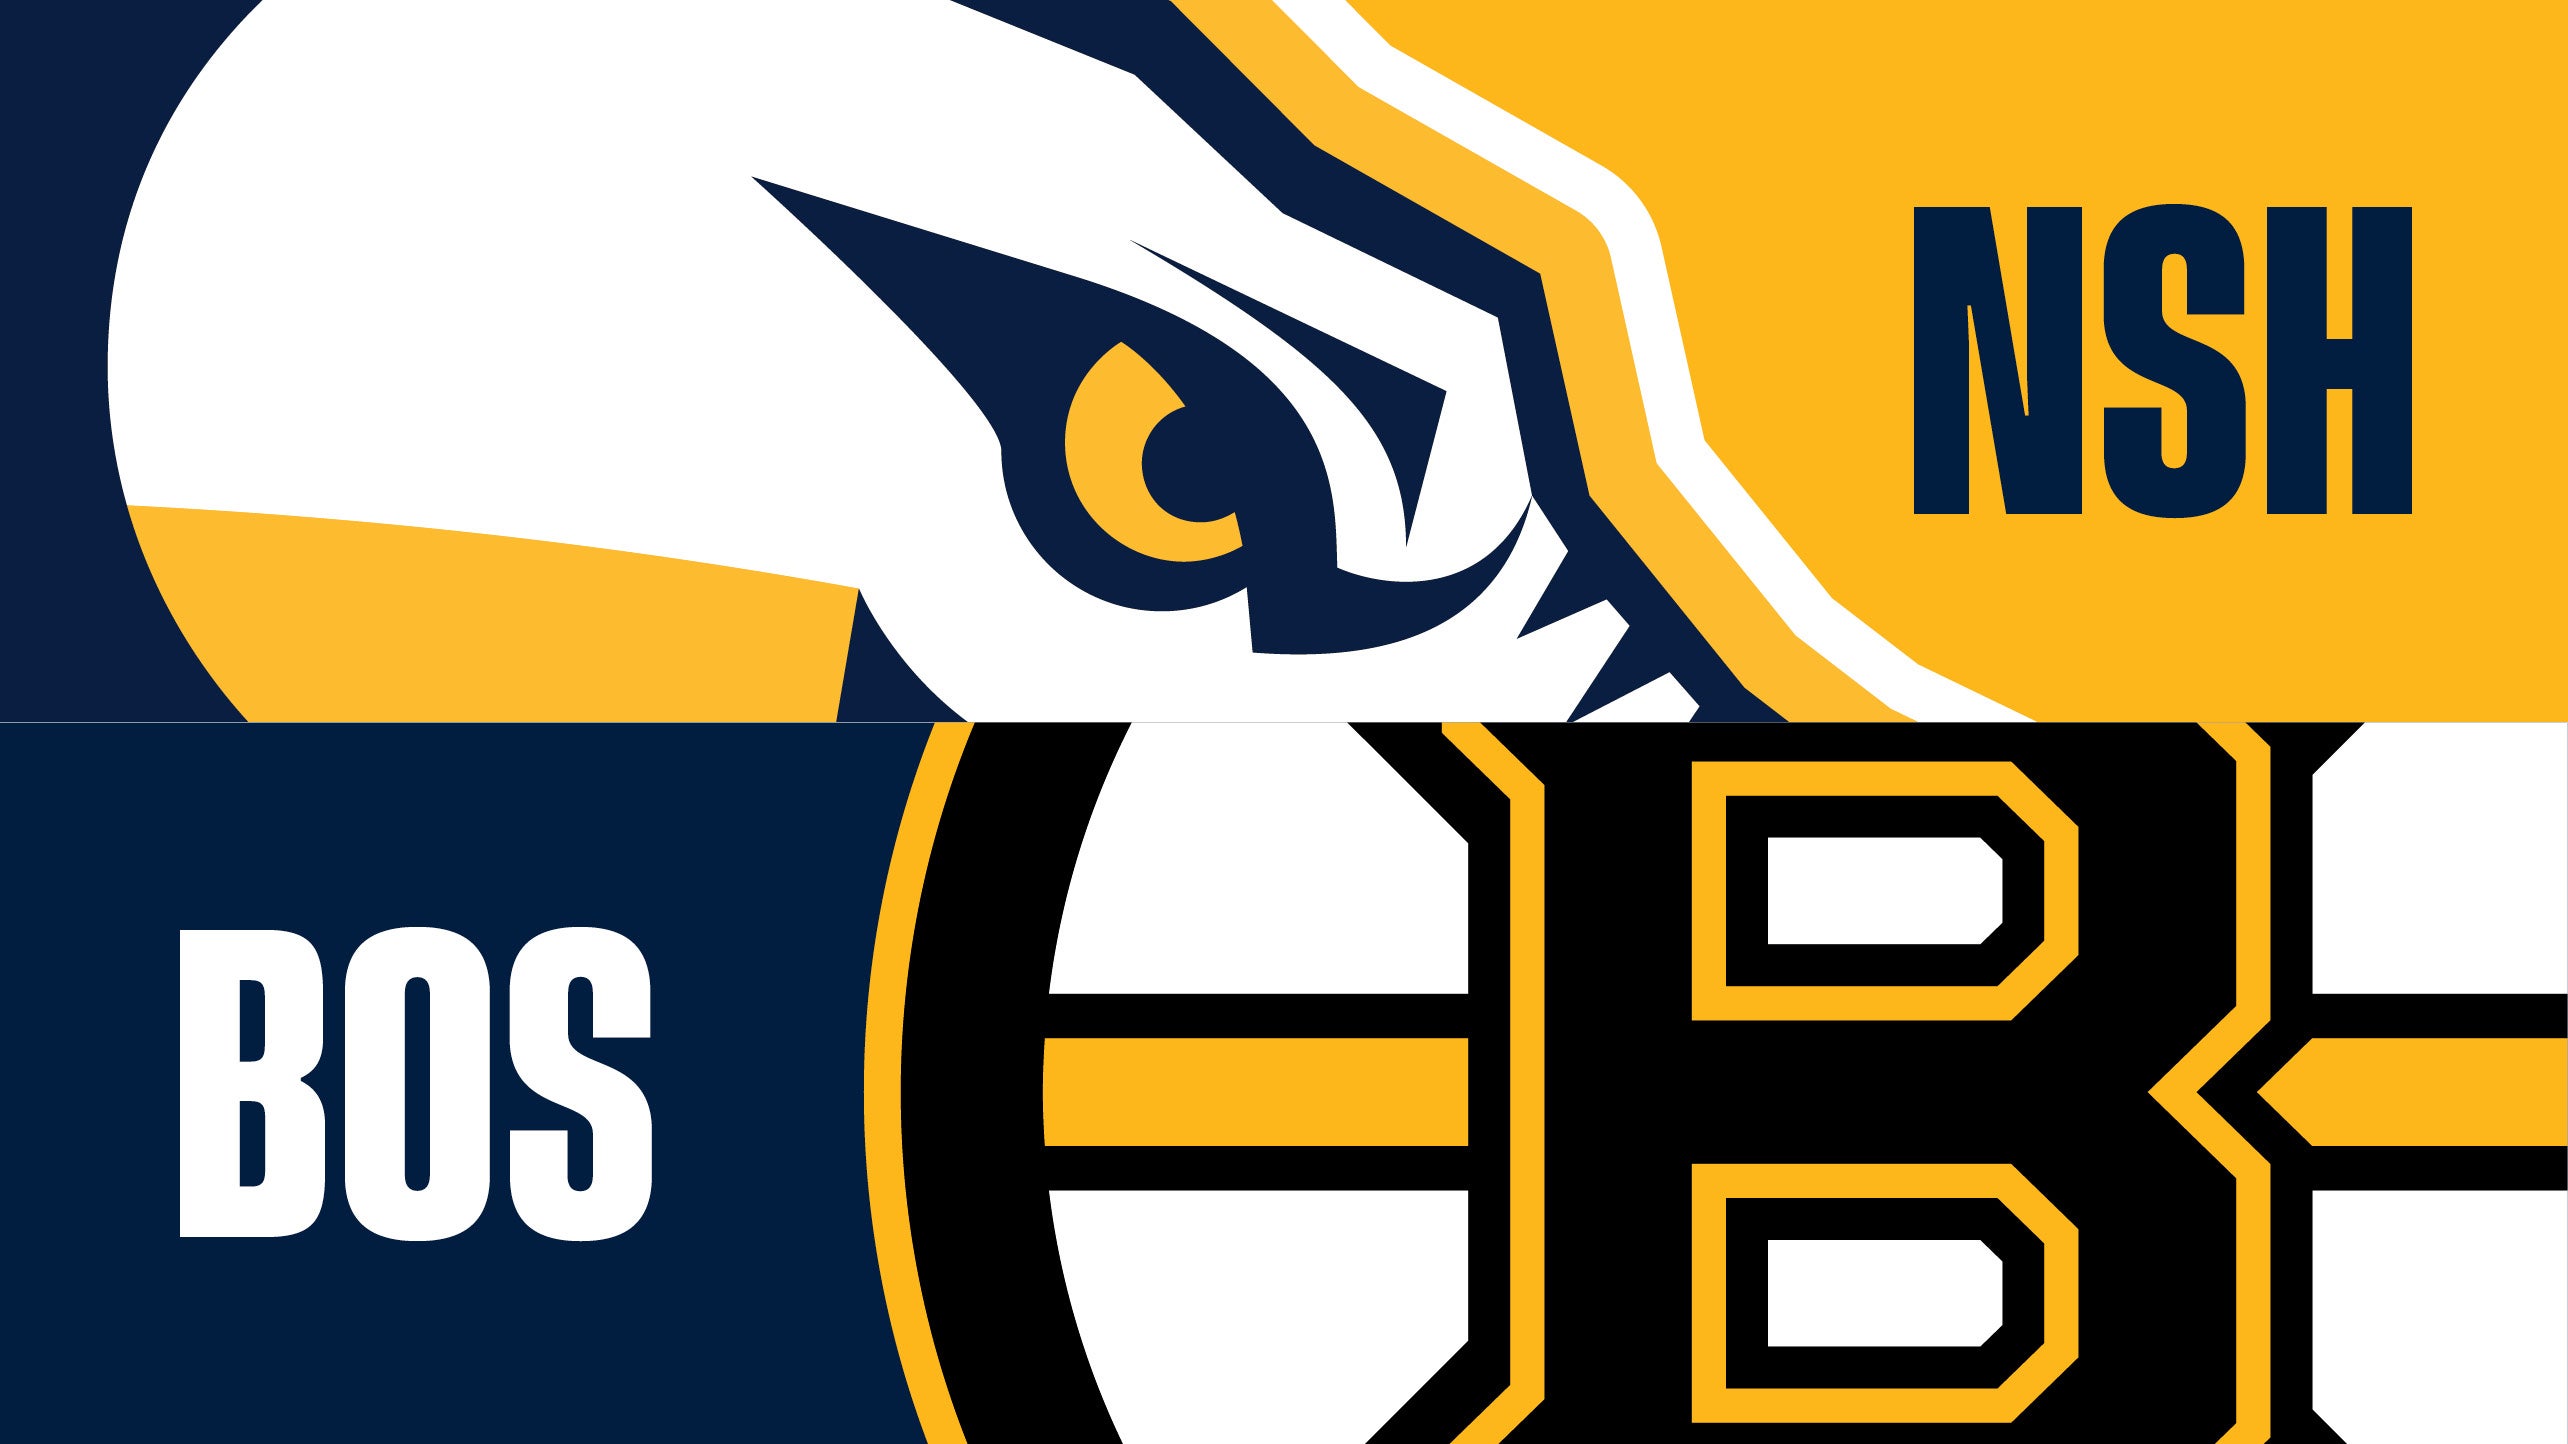 More Info for Boston Bruins vs. Nashville Predators